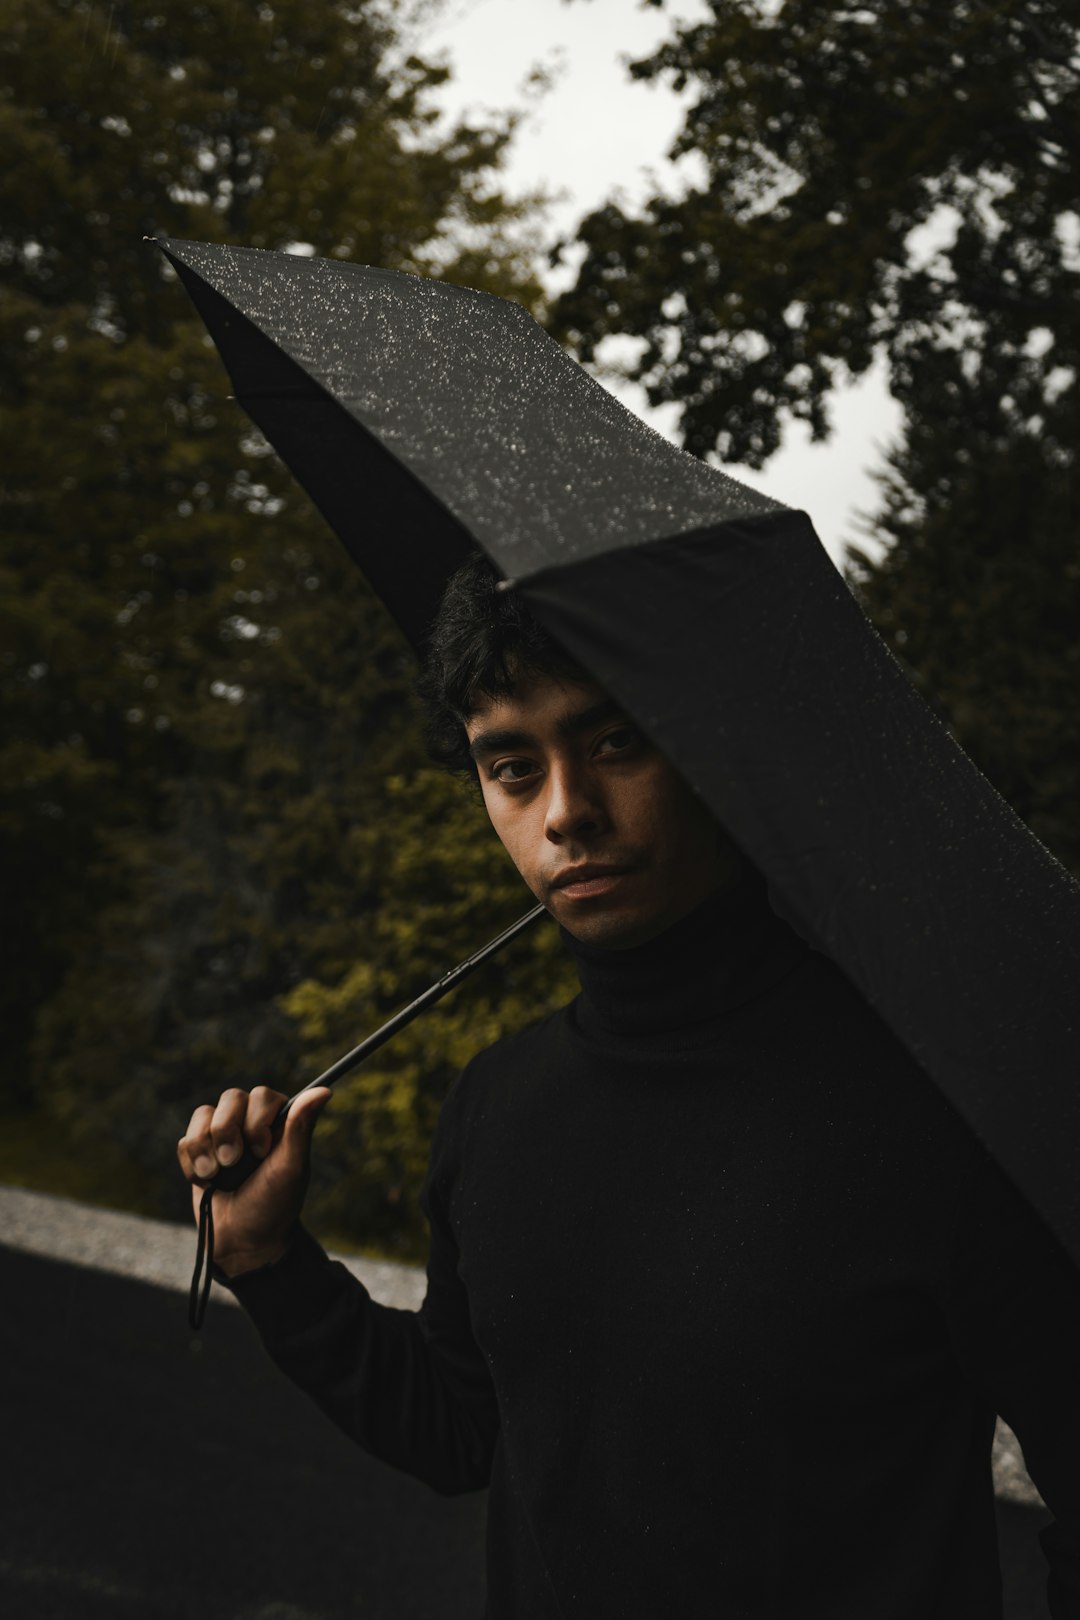 man in black hoodie holding umbrella